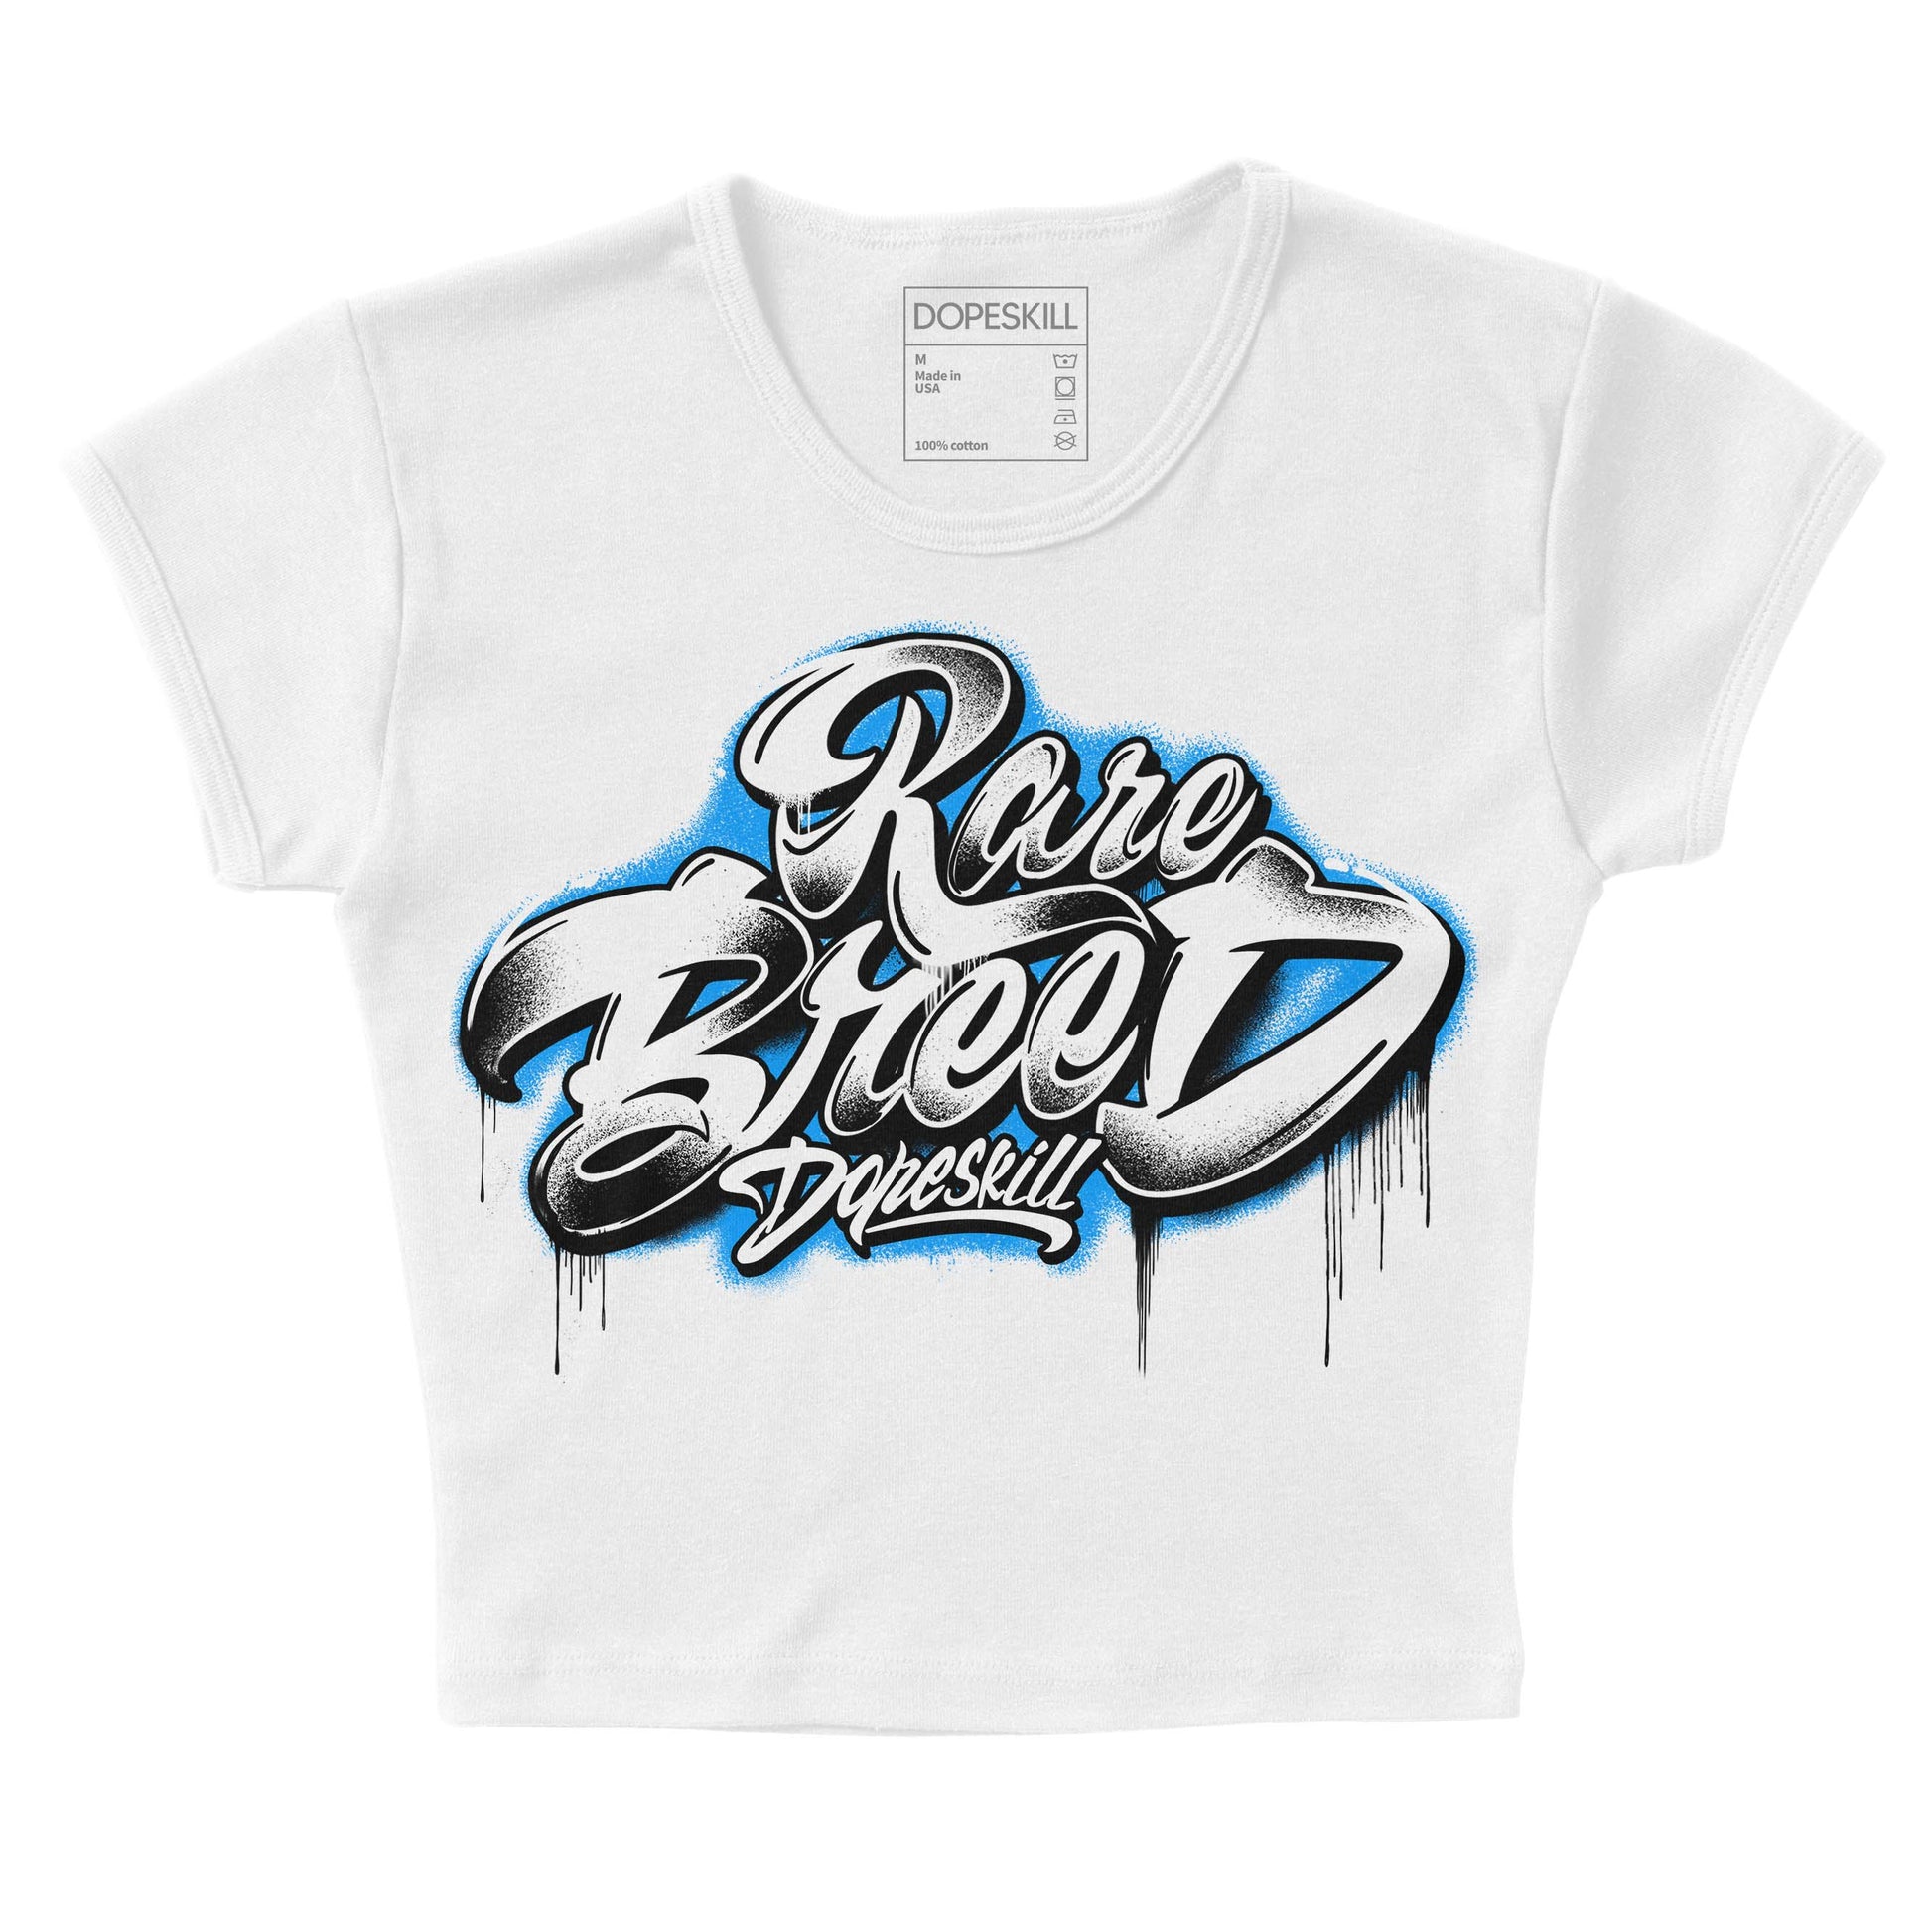 Jordan 6 “Reverse Oreo” DopeSkill Women's Crop Top Rare Breed Type Graphic Streetwear - White